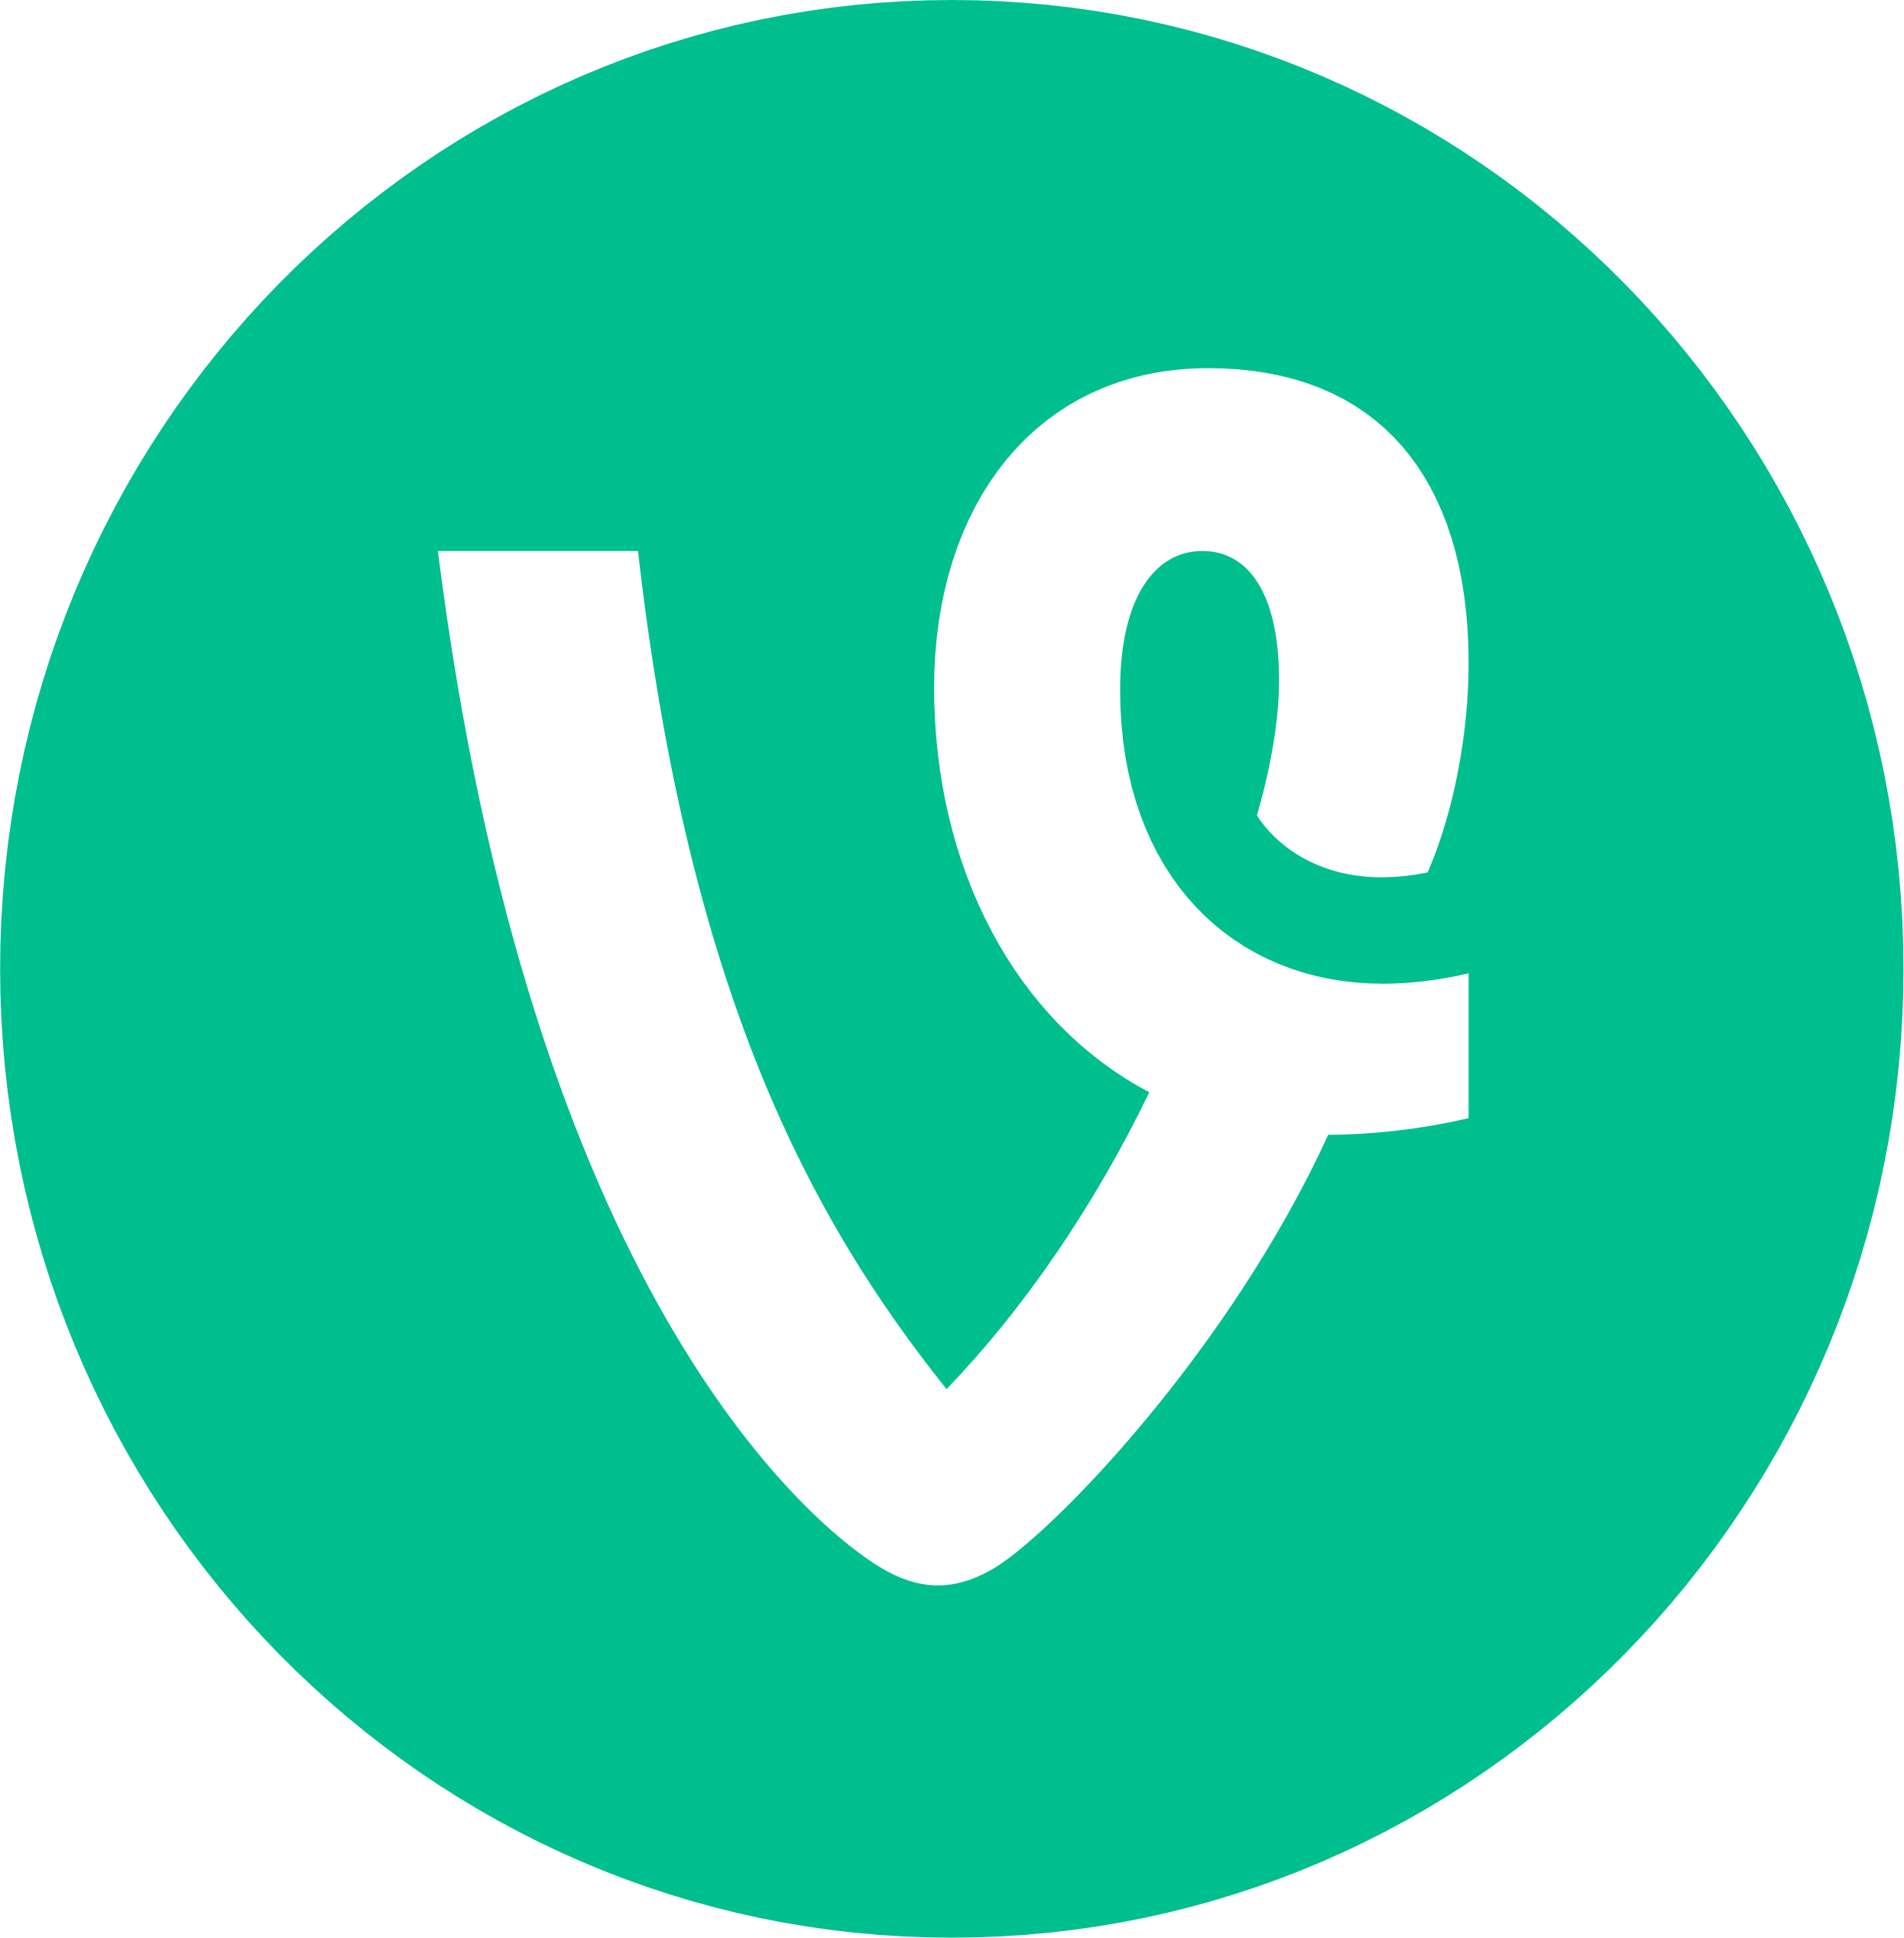 vine app logo transparent - Google Search | Vine logo, App ... - Funny Google Logos